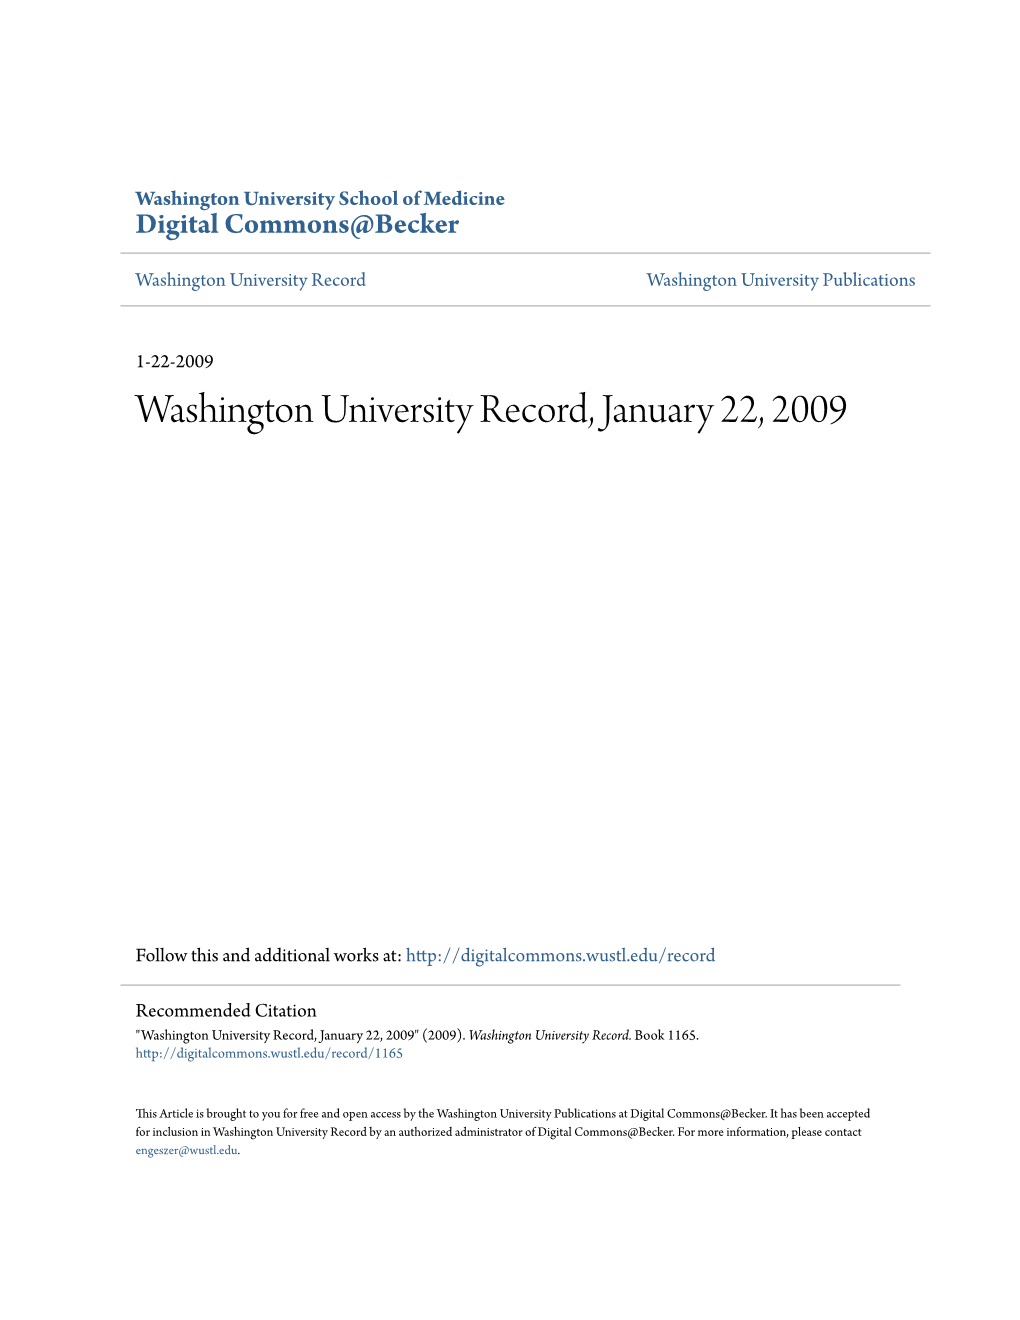 Washington University Record, January 22, 2009